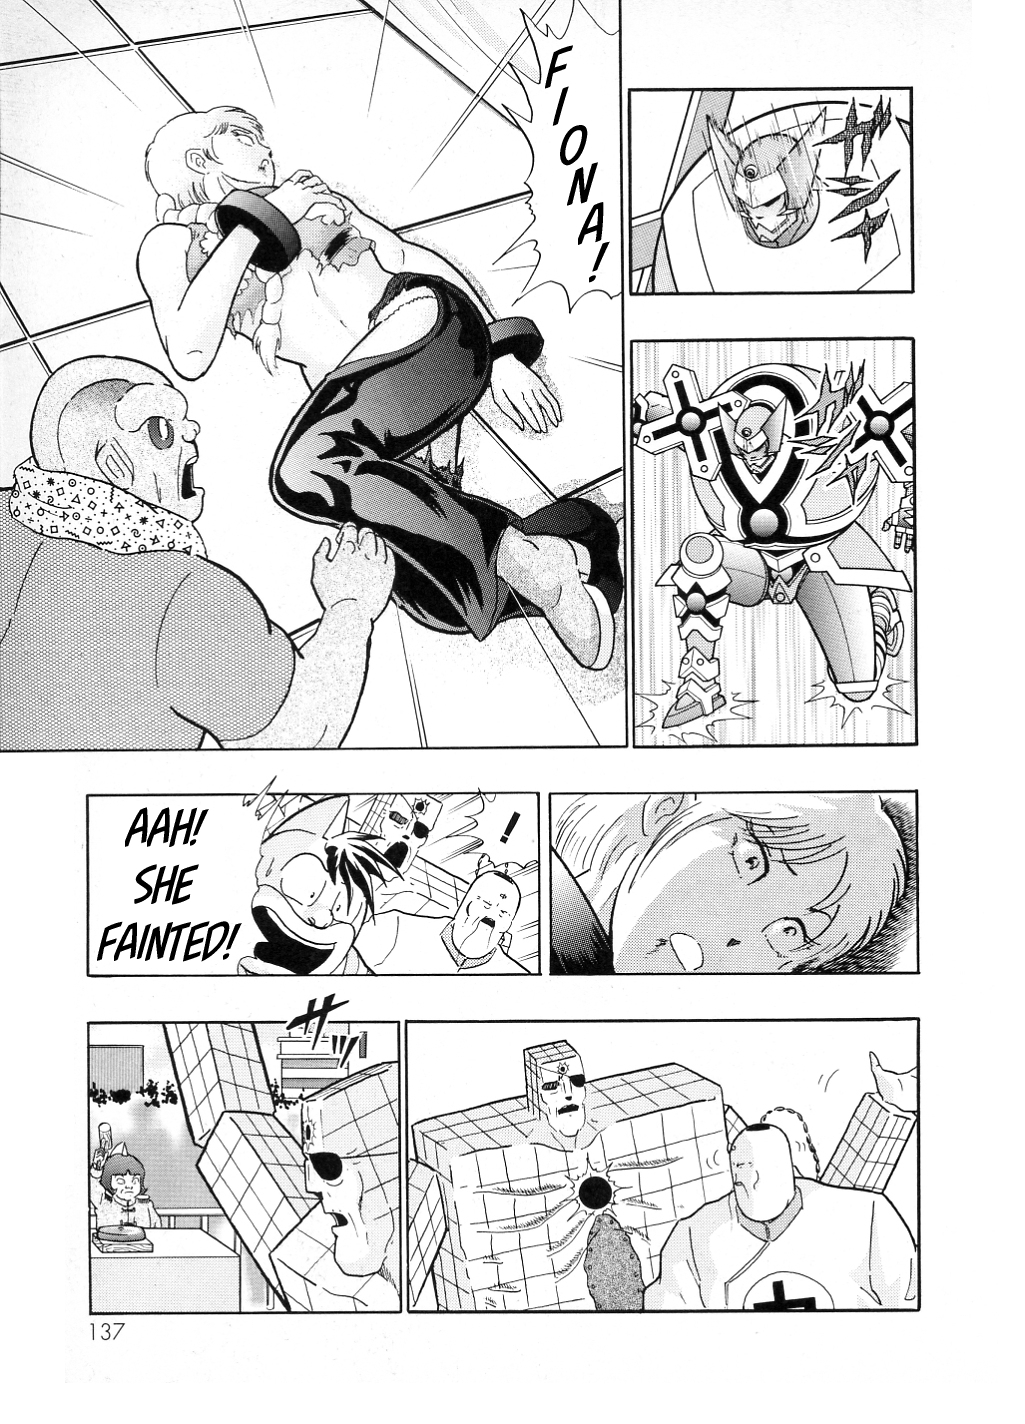 Kinnikuman Nisei ~All Out Chojin Assault~ Vol. 2 Ch. 27 A Despicable Lowlife! Doomman Goes Into a Frenzy!